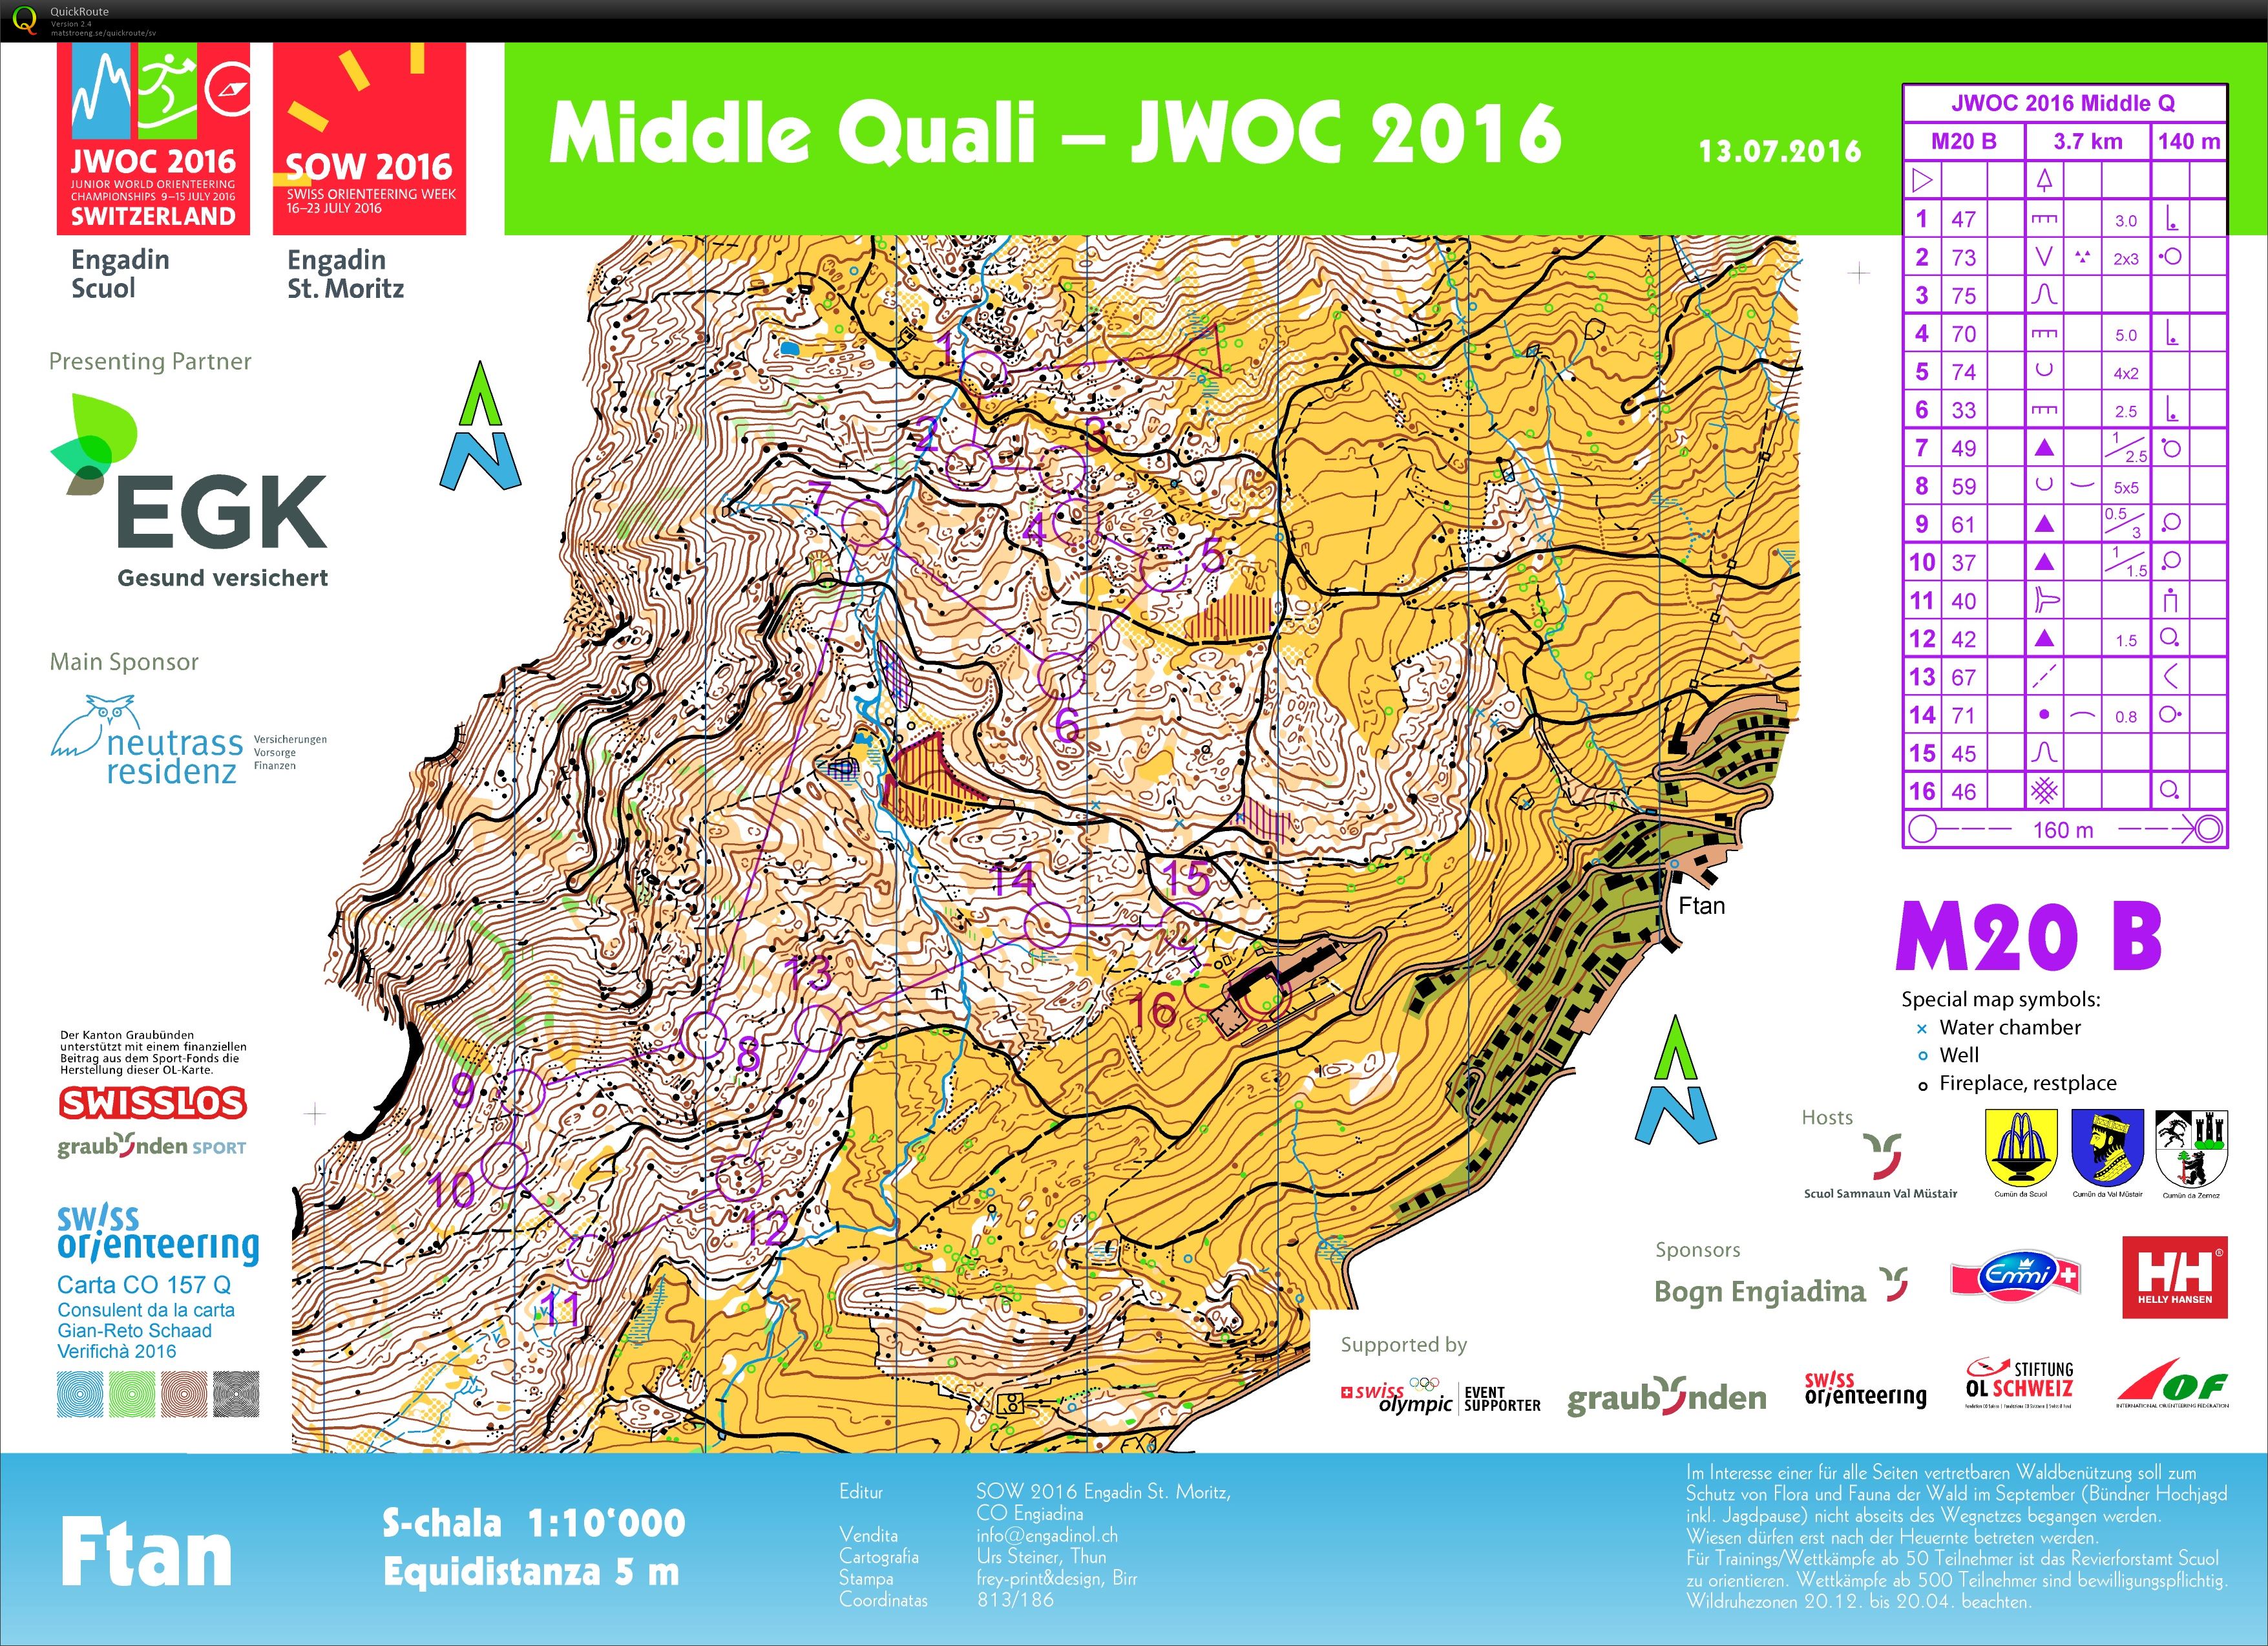 JWOC Middle Qualification heat B (2016-07-13)